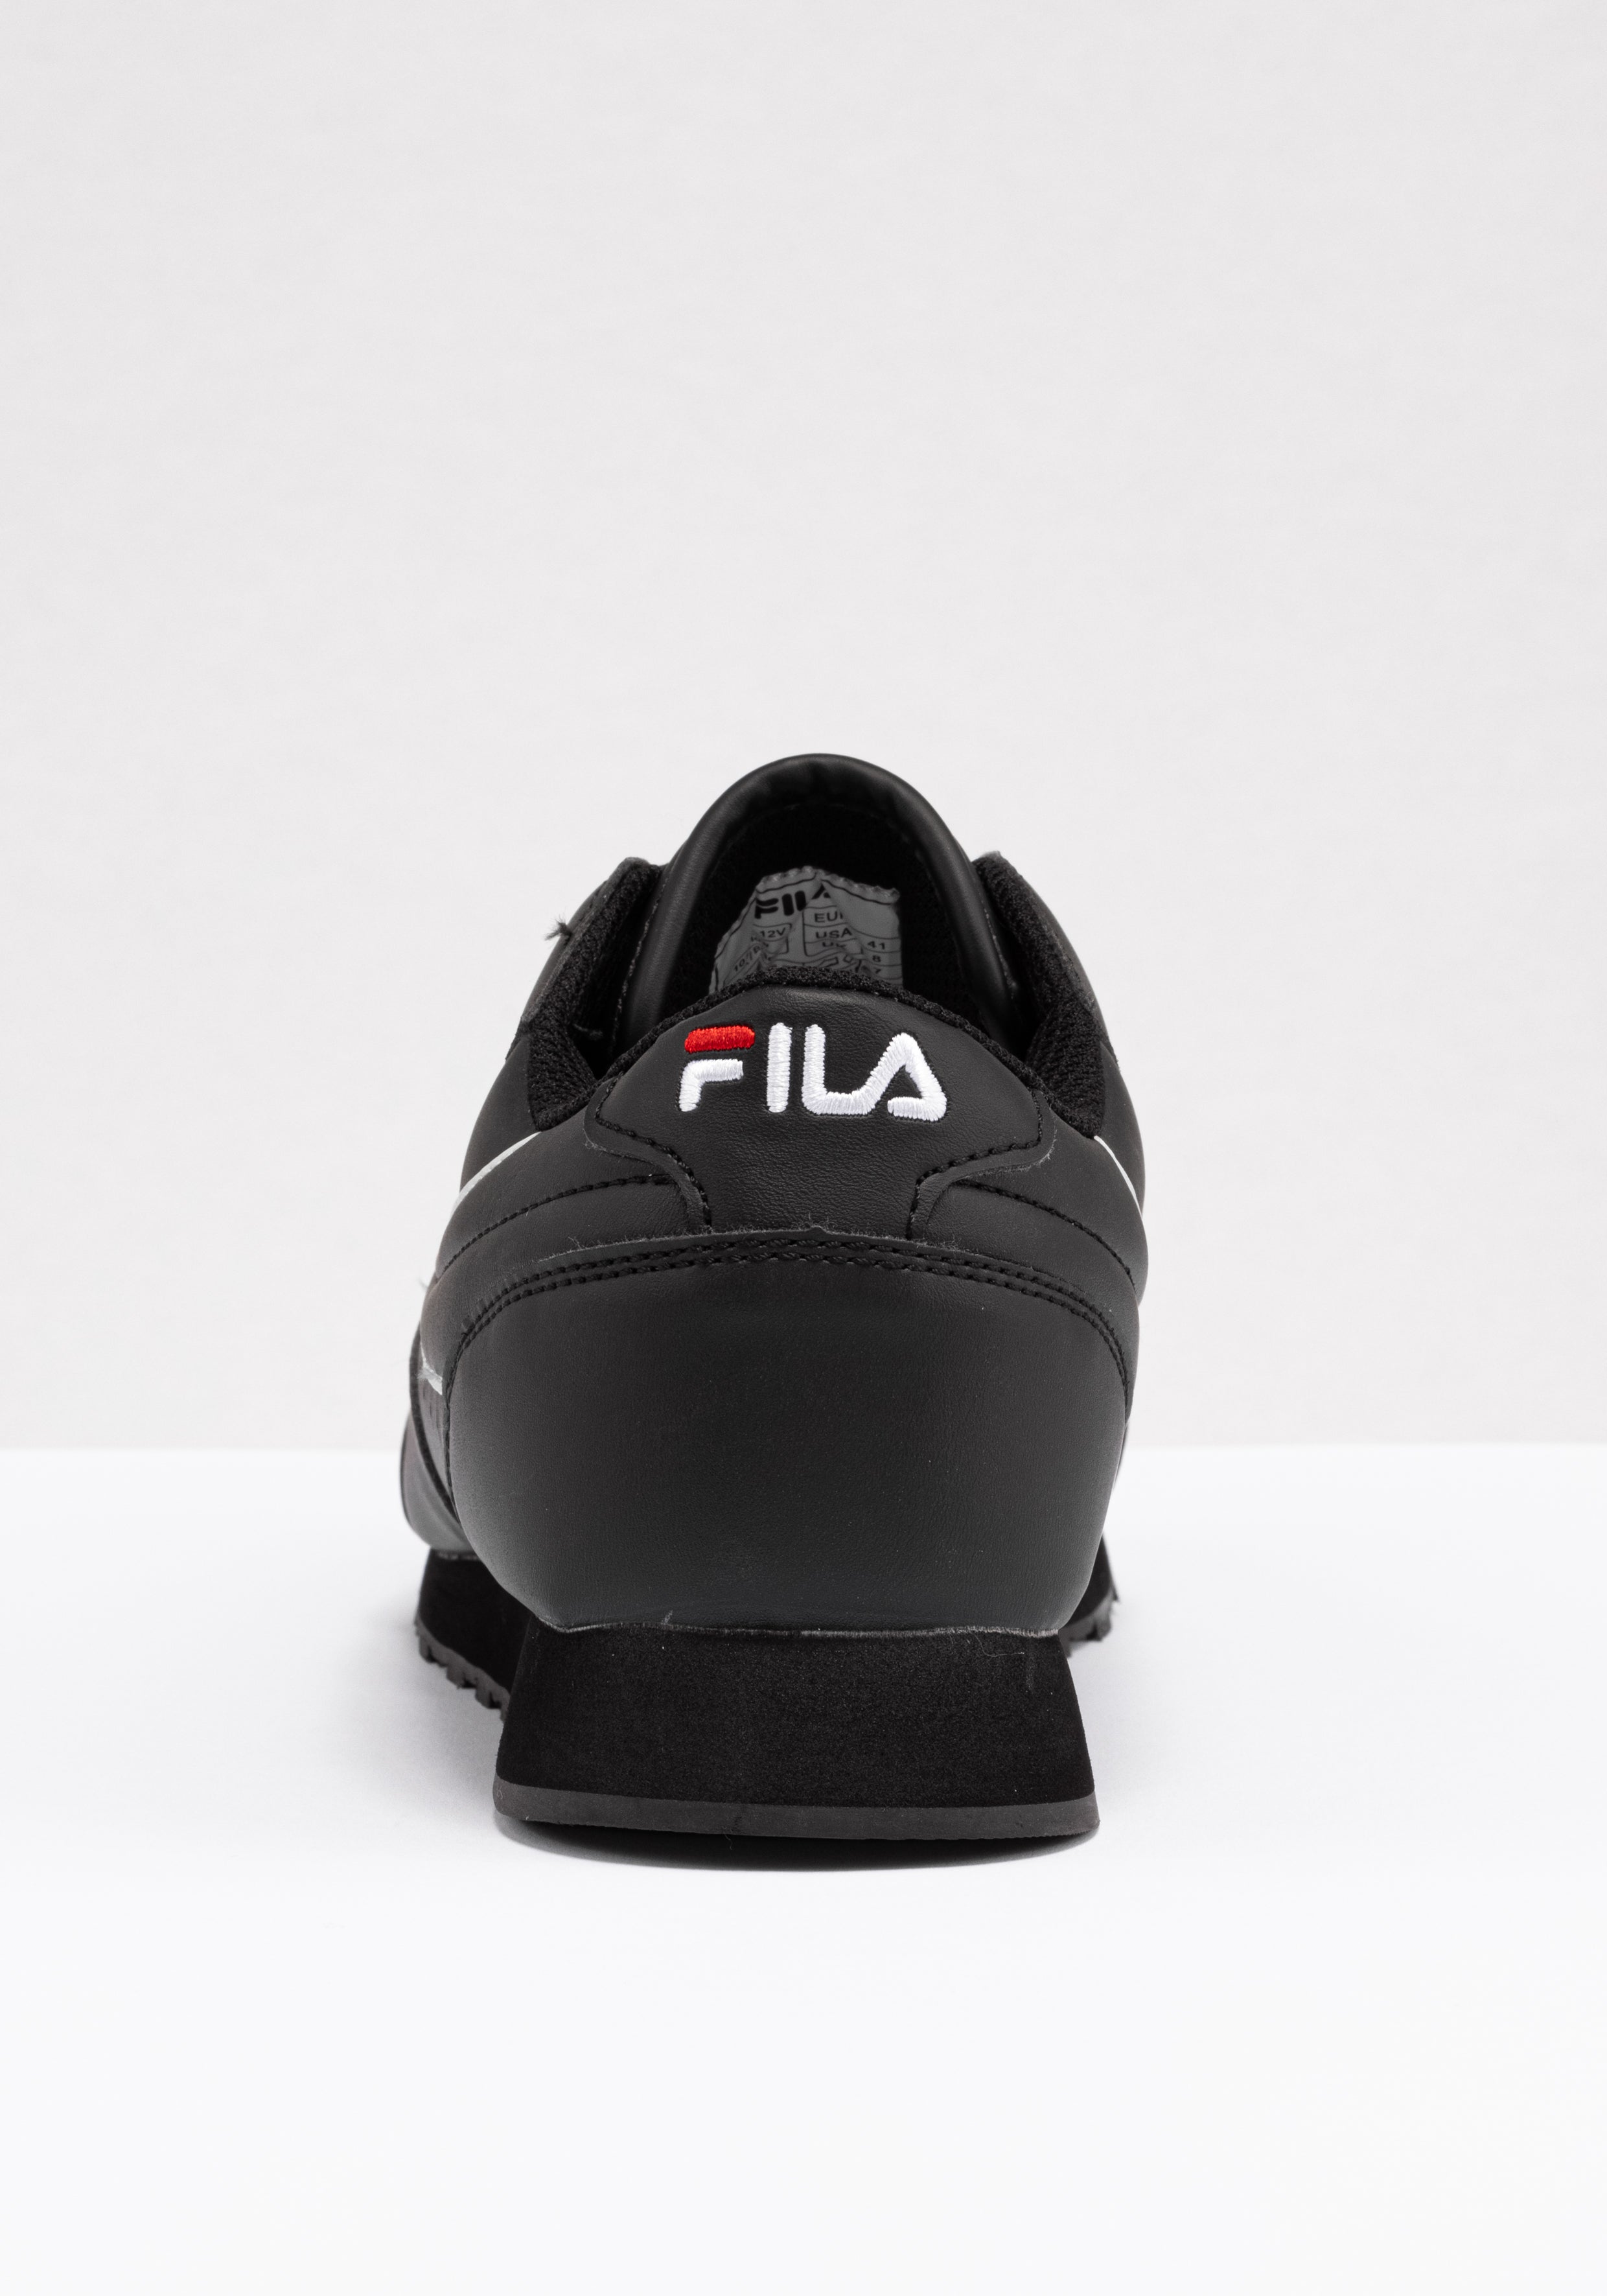 Orbit in Black-Black Sneakers Fila   